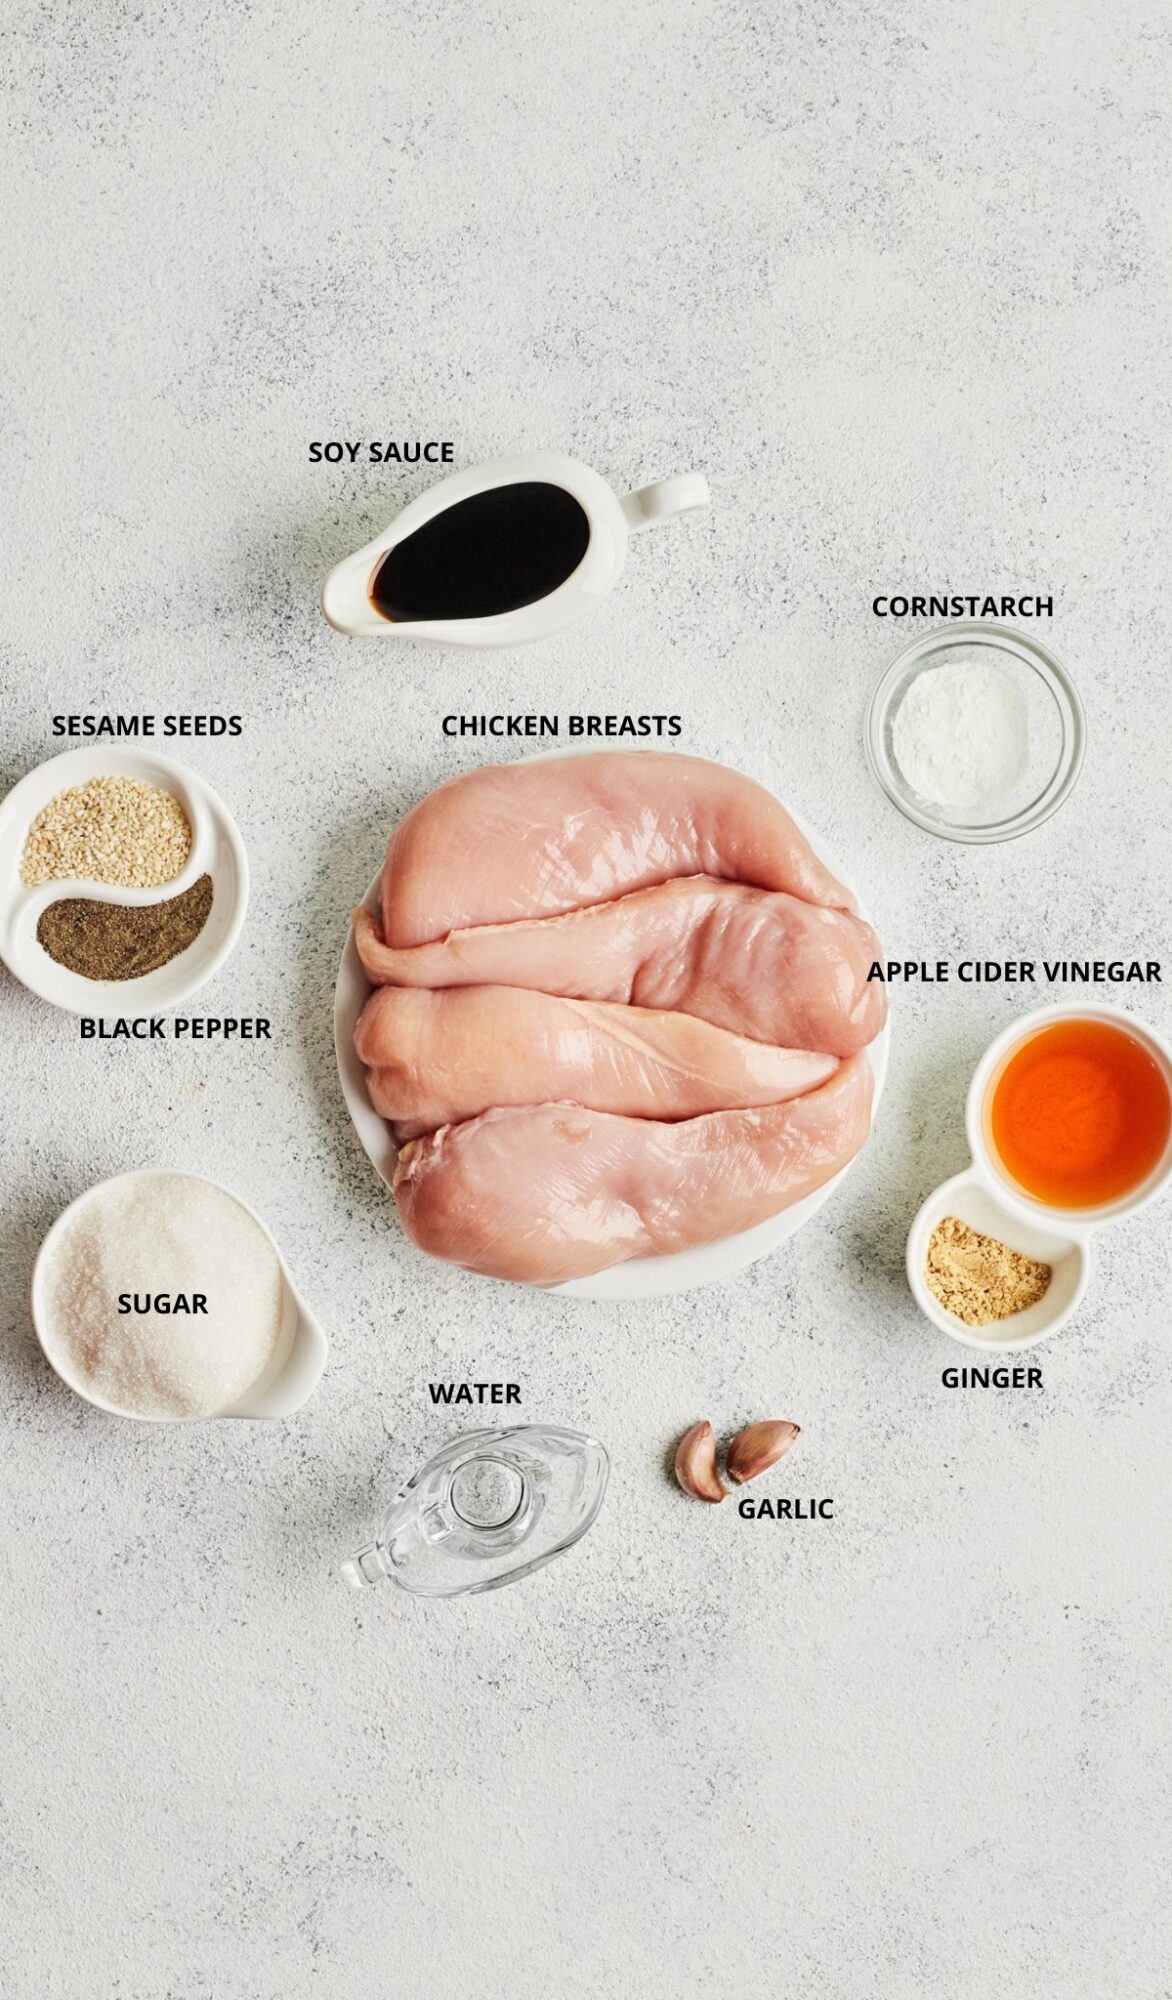 Teriyaki chicken recipe ingredients- soy sauce, cornstarch, chicken breasts, sesame seeds, black pepper, water, garlic, apple cider vinegar, sugar, and ginger.